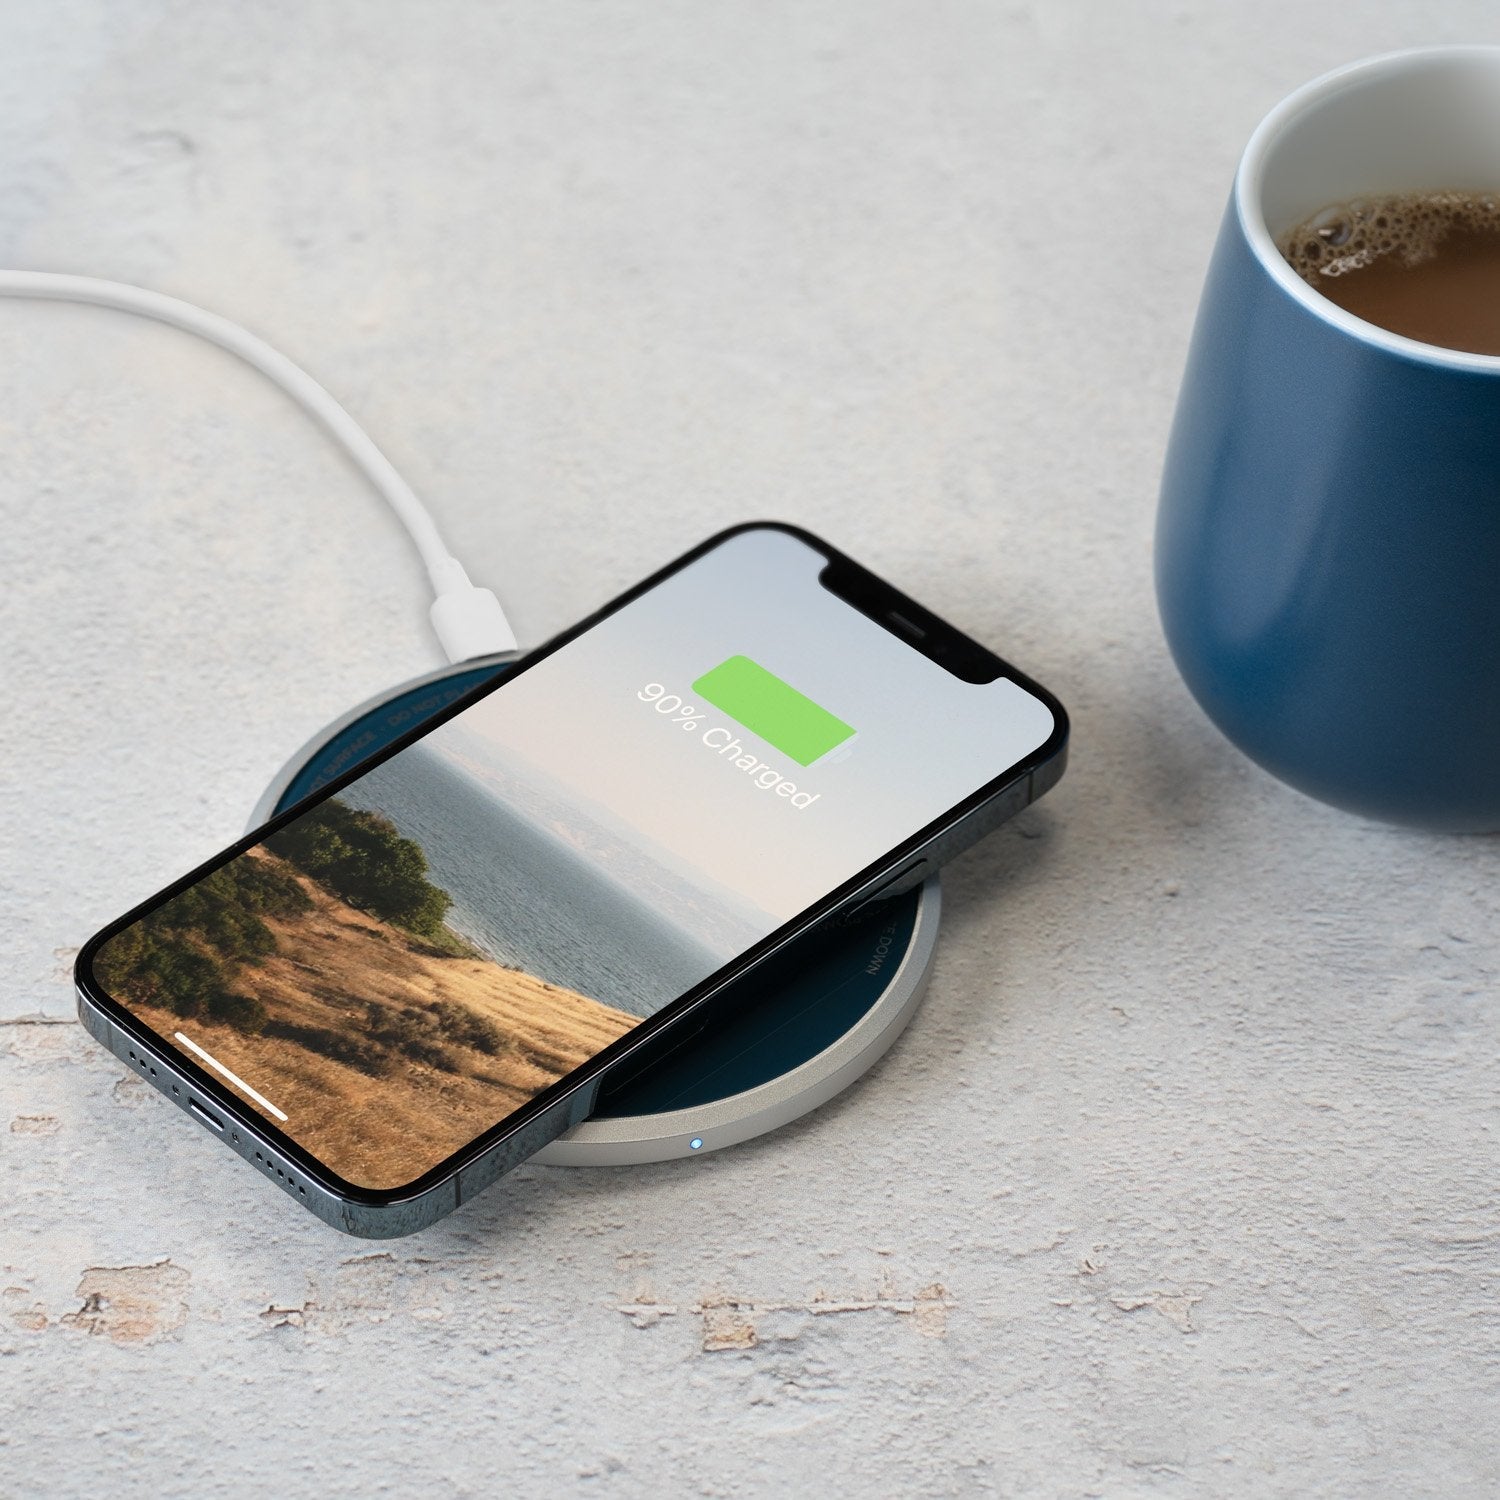 Navy mug with coffee next to phone on charging pad